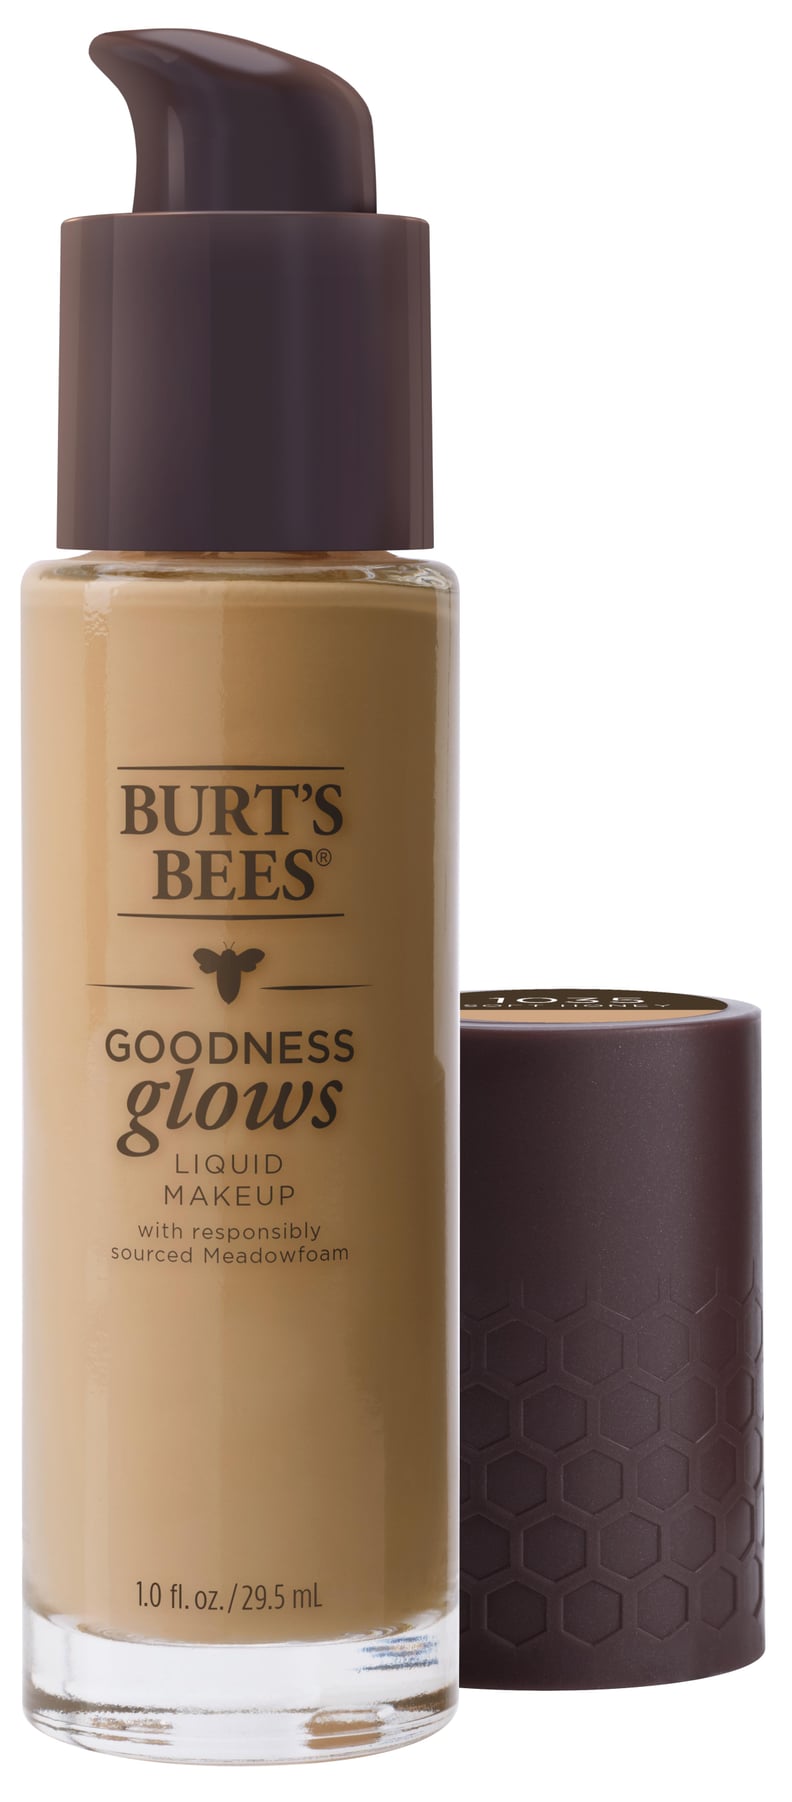 Burt's Bees Goodness Glows Liquid Makeup ($17)